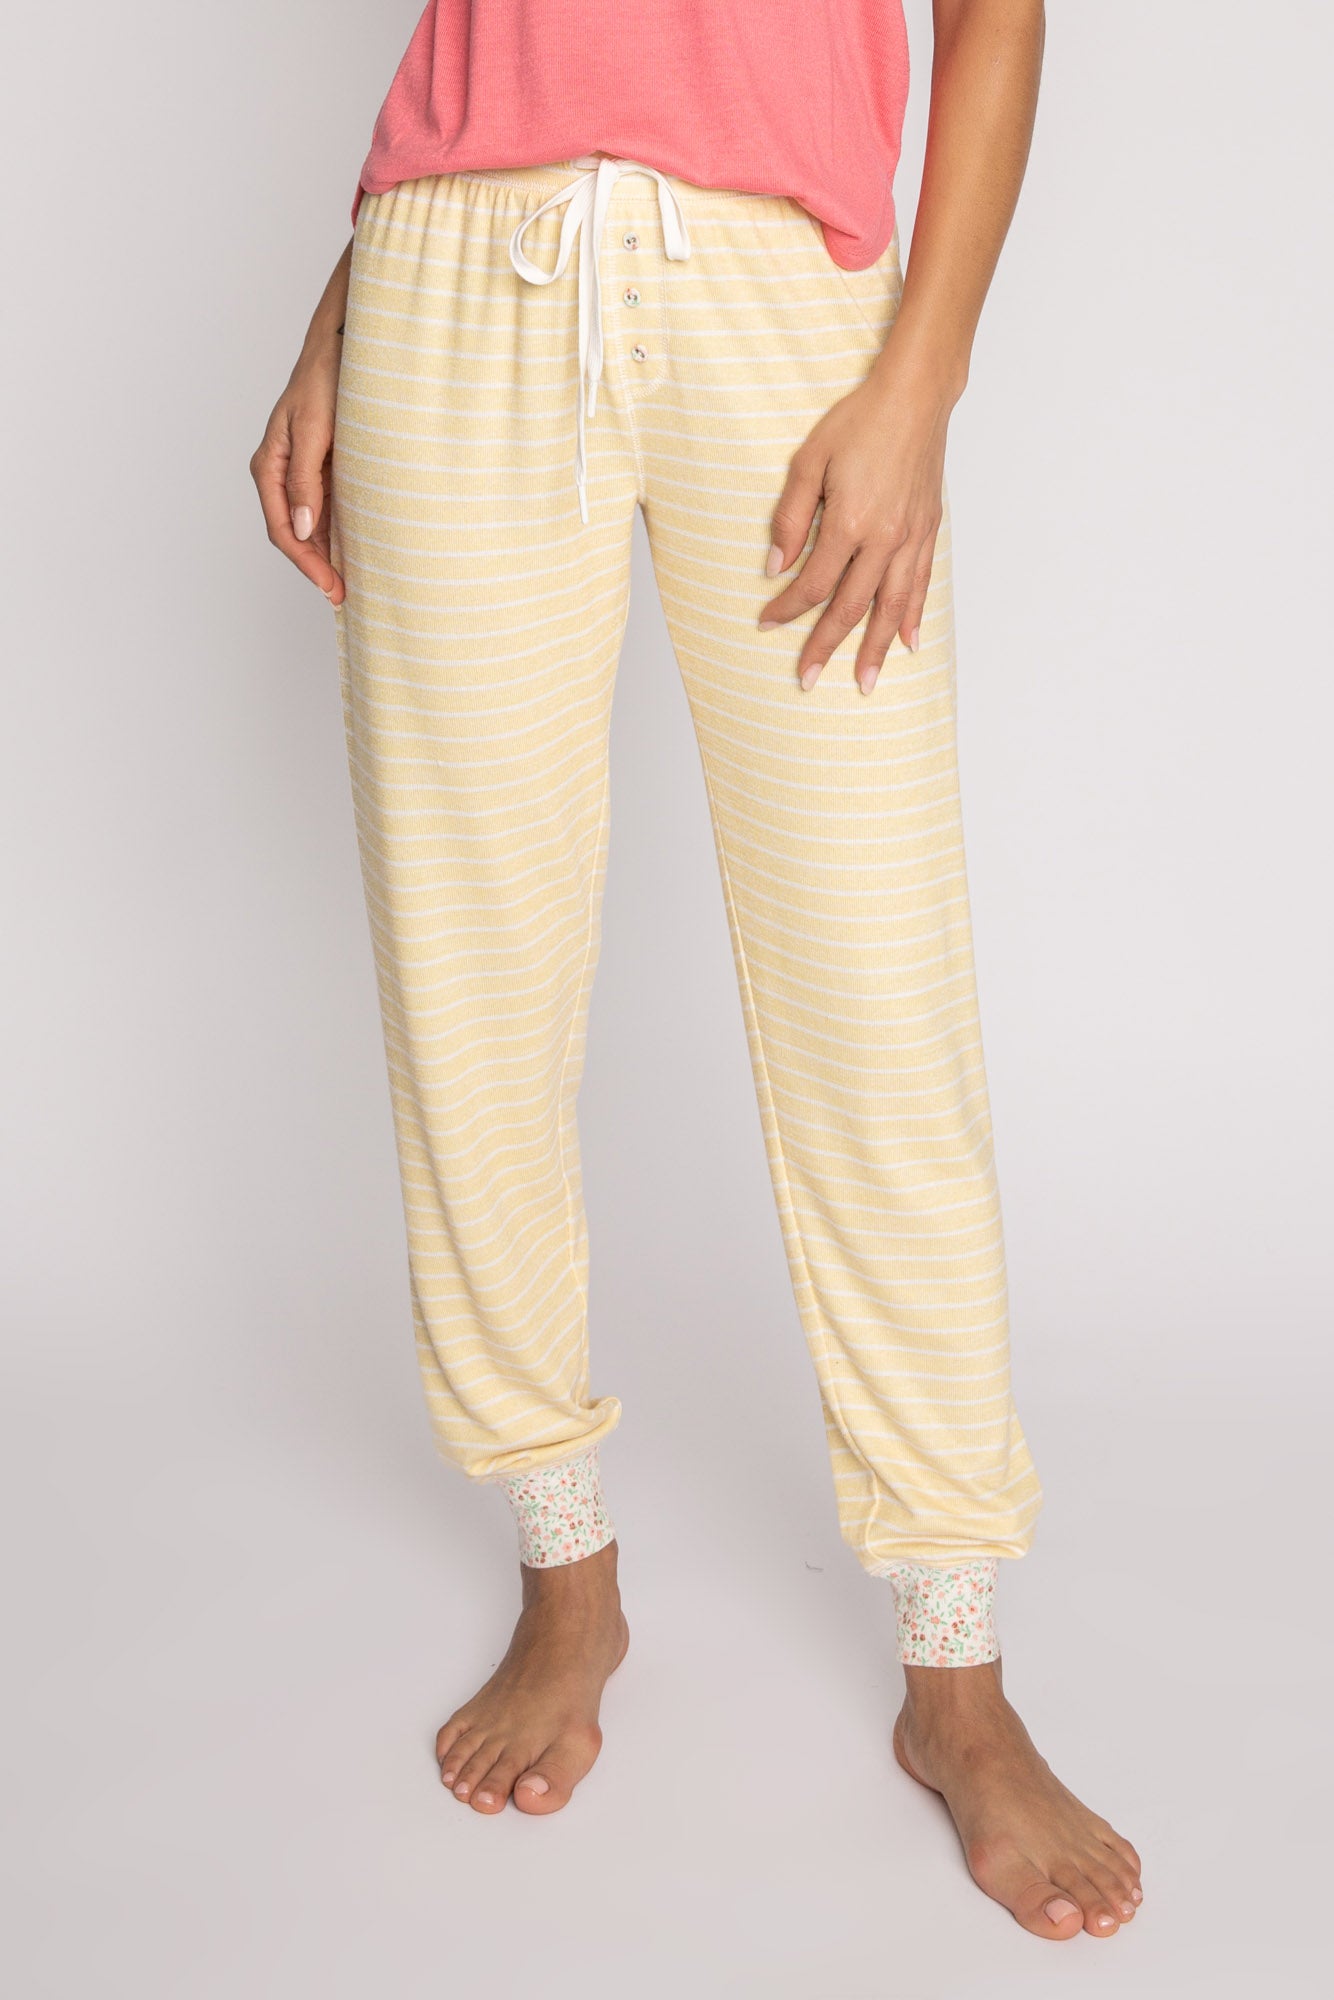 PJ Salvage Sunshine Stripe Pants